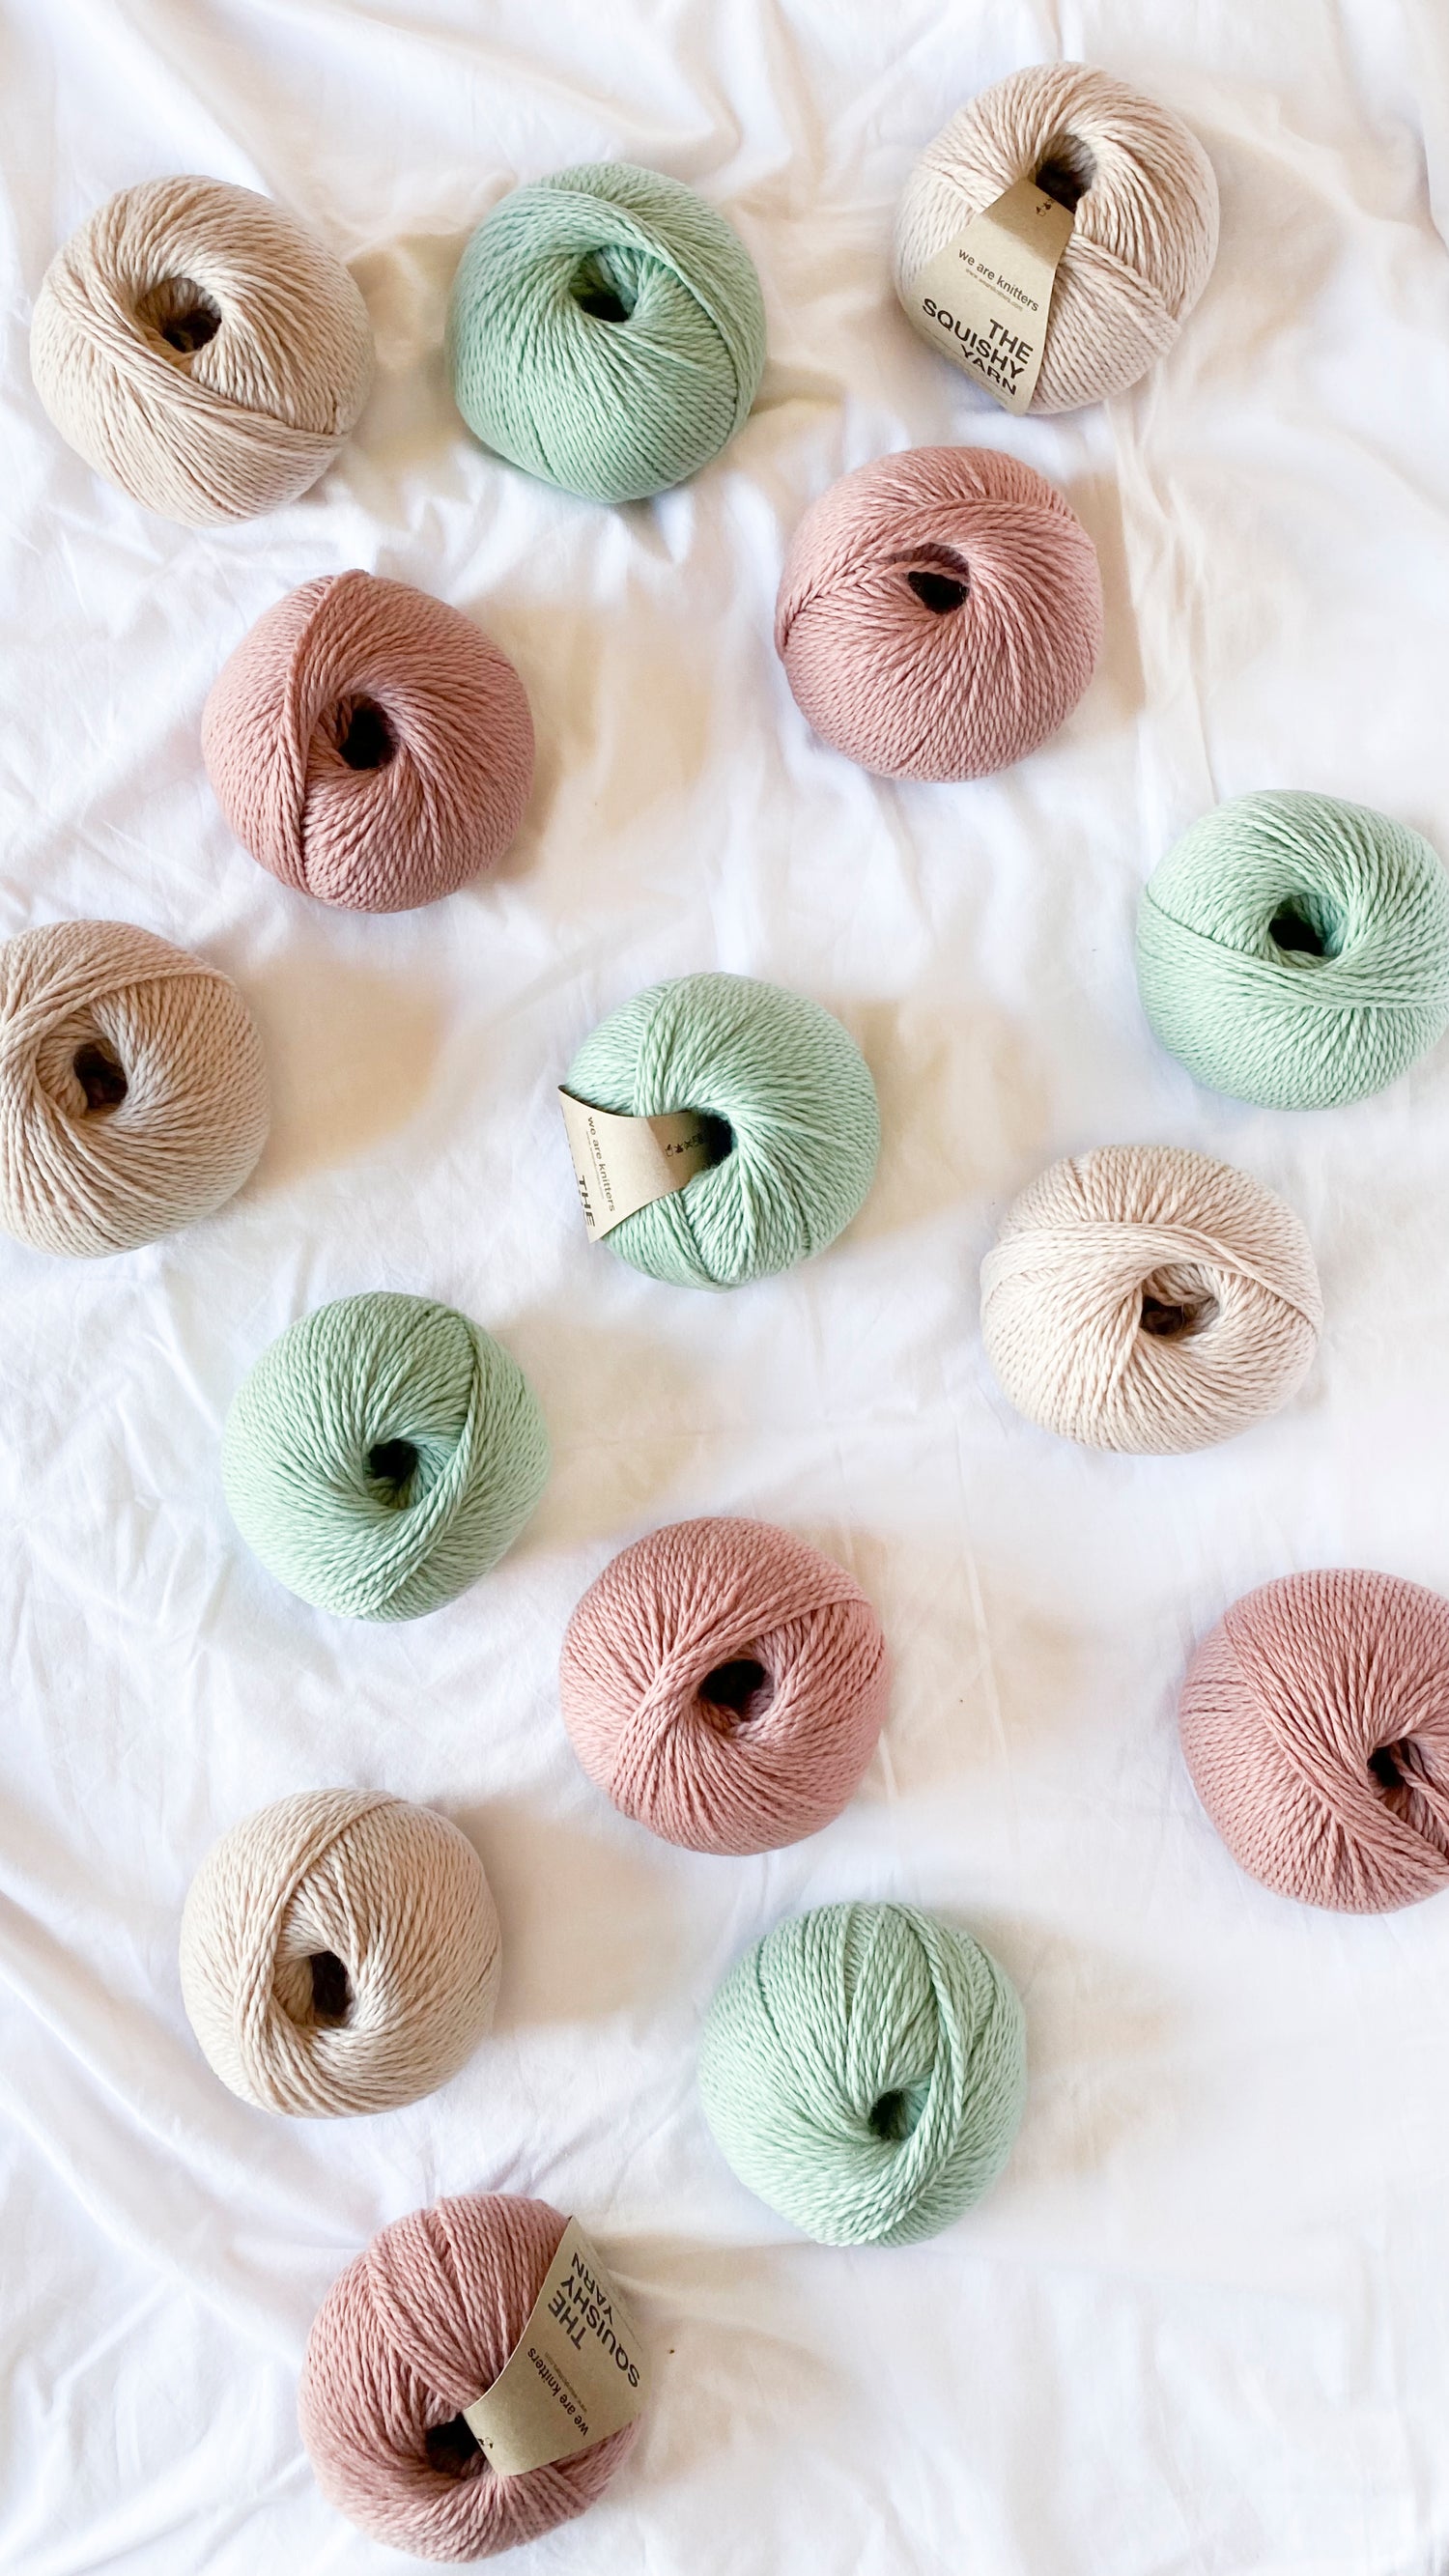 15 Pack of Squishy Yarn Balls